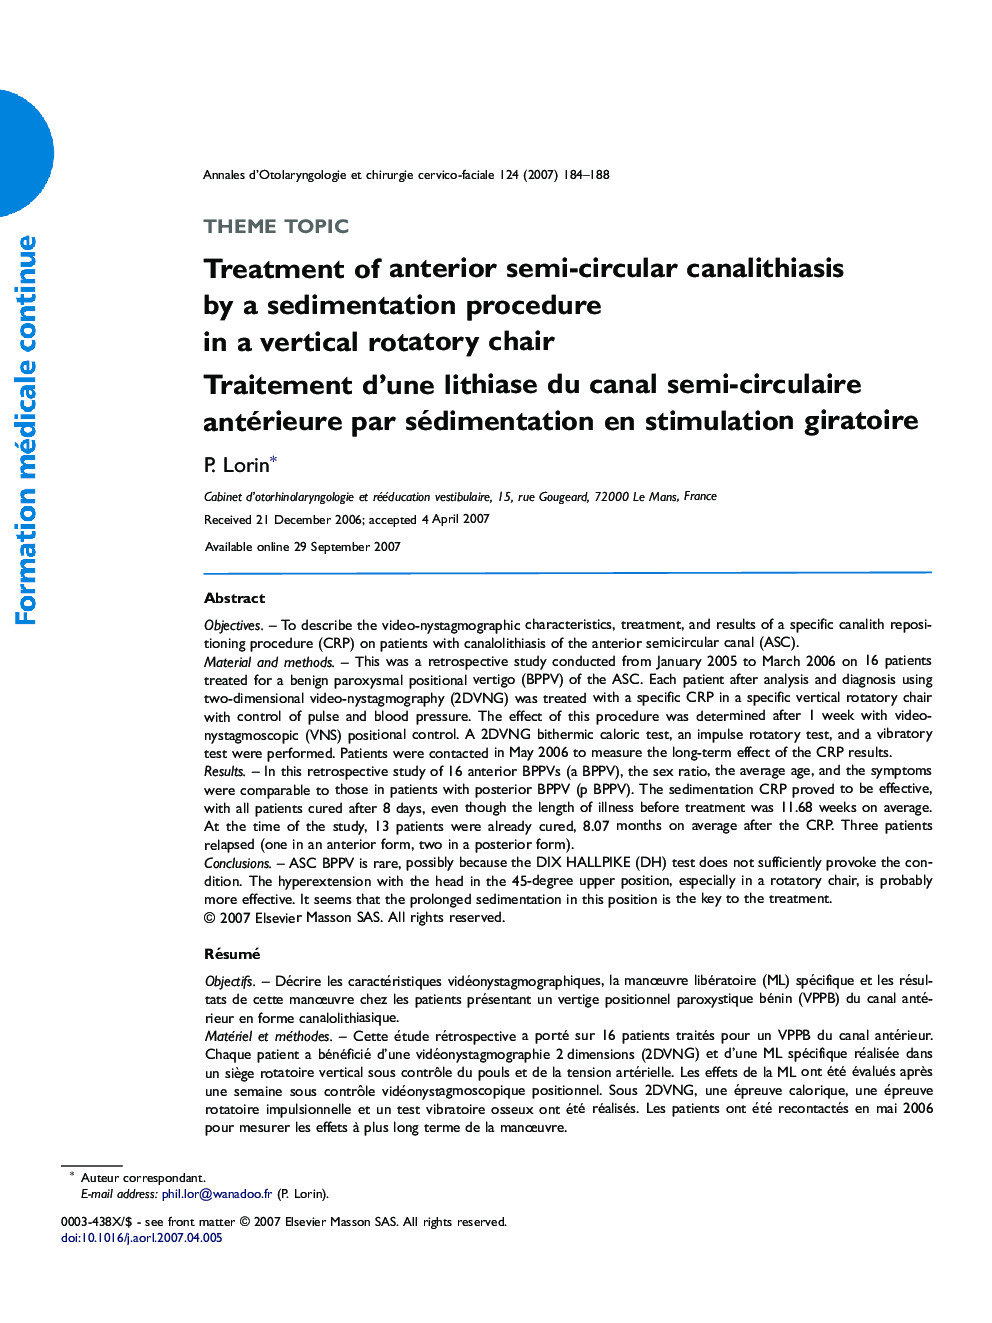 Treatment ofÂ anterior semi-circular canalithiasis byÂ aÂ sedimentation procedure inÂ aÂ vertical rotatory chair